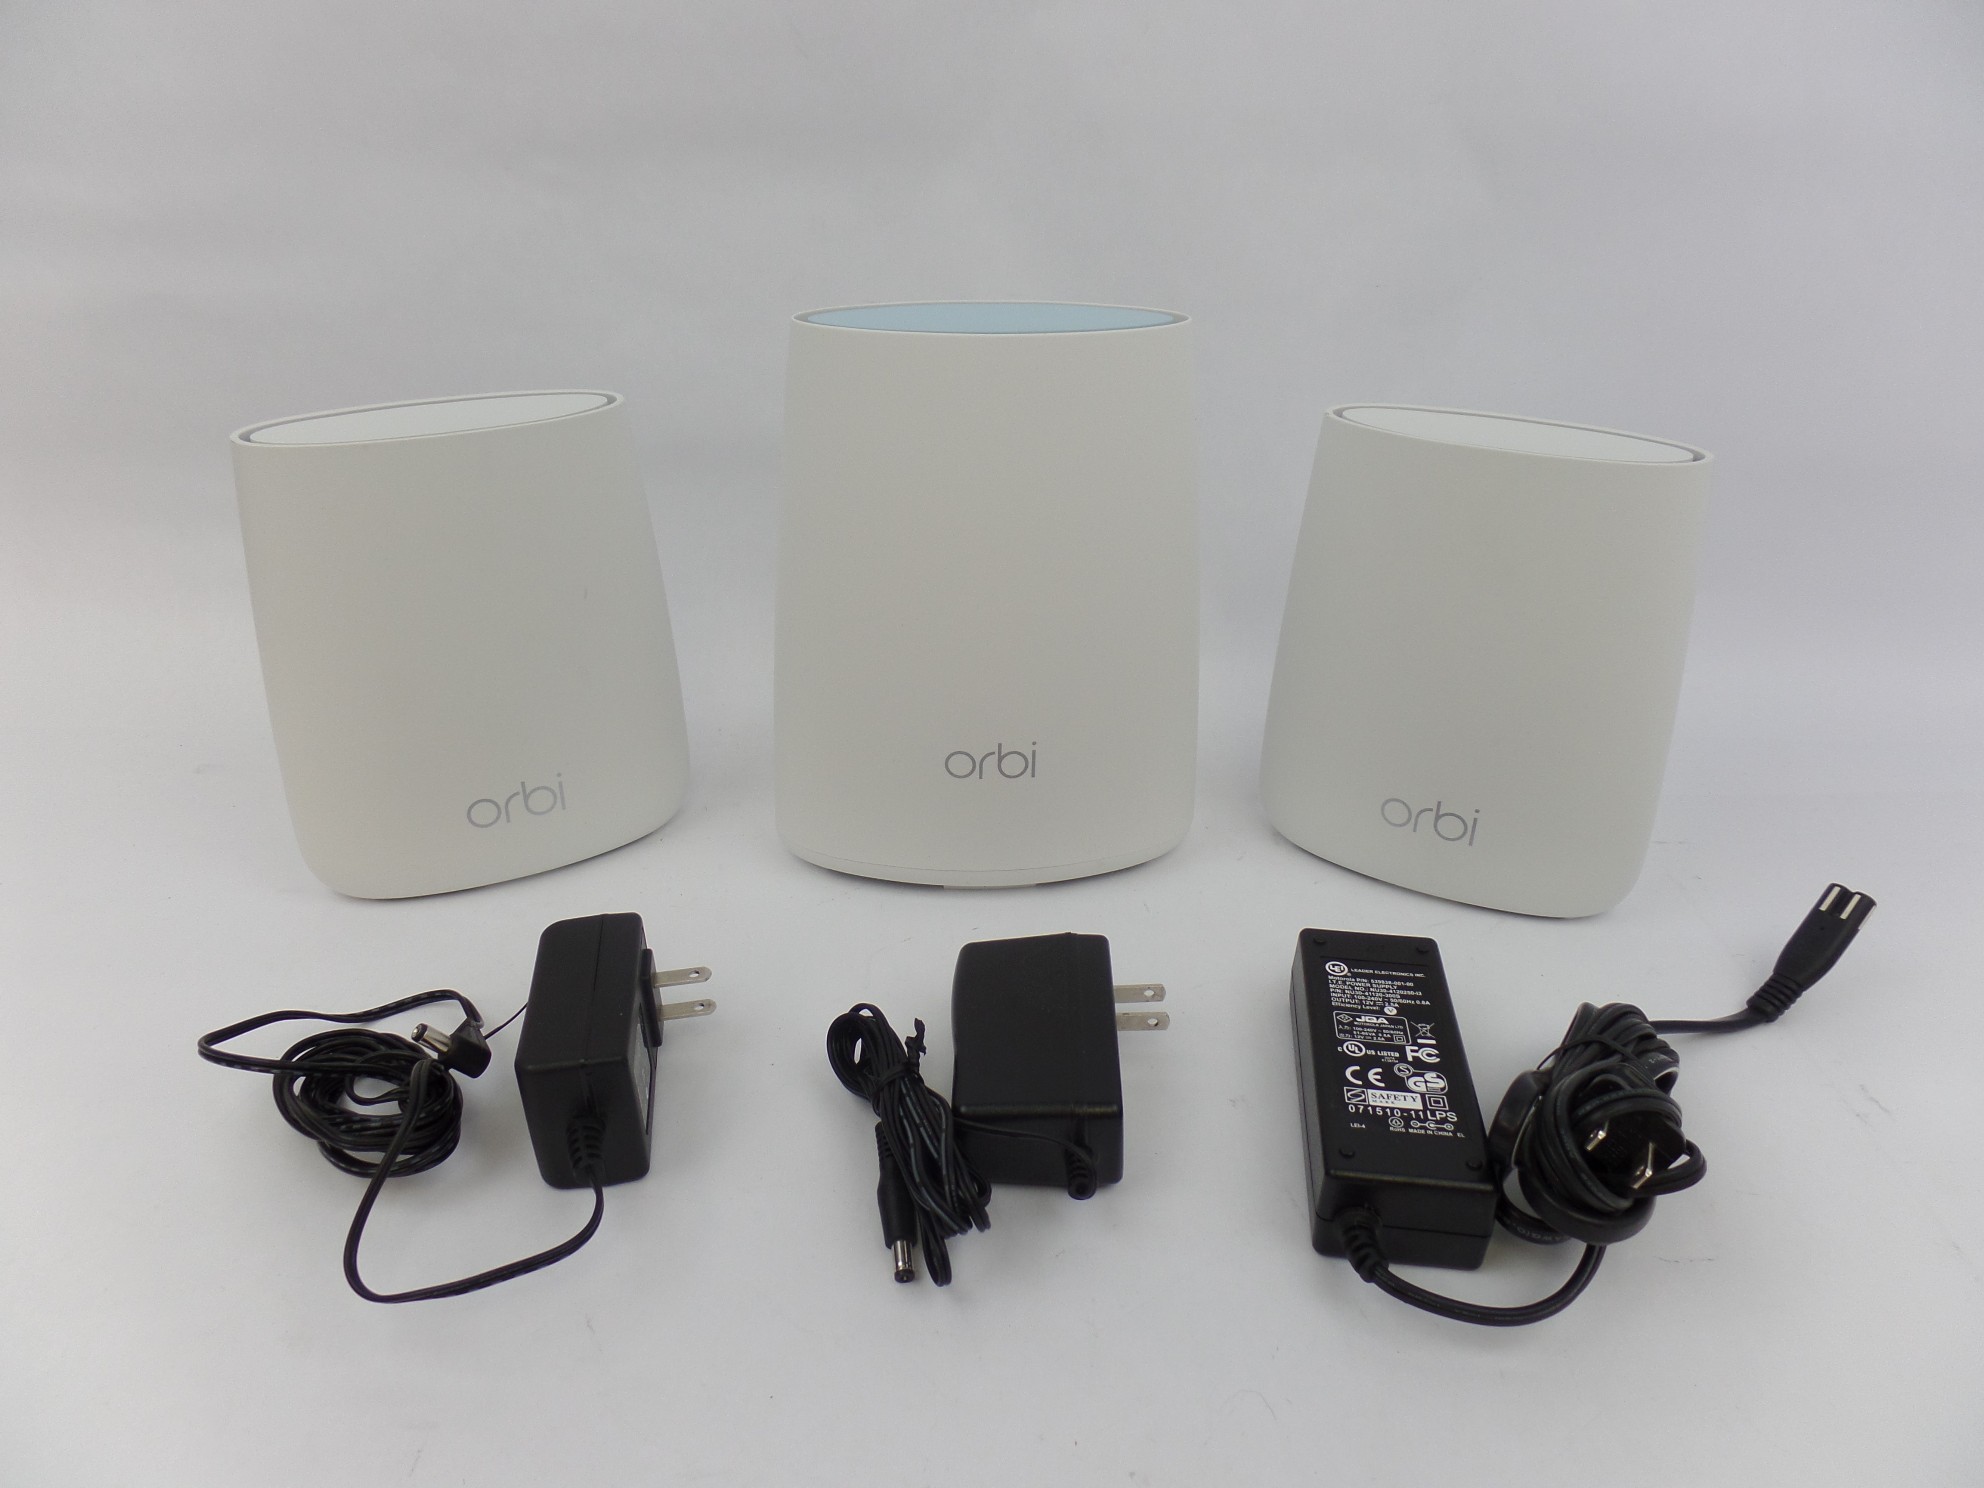 NETGEAR Orbi Tri-Band Wi-Fi Router AC2200 RBK43-200NAS 